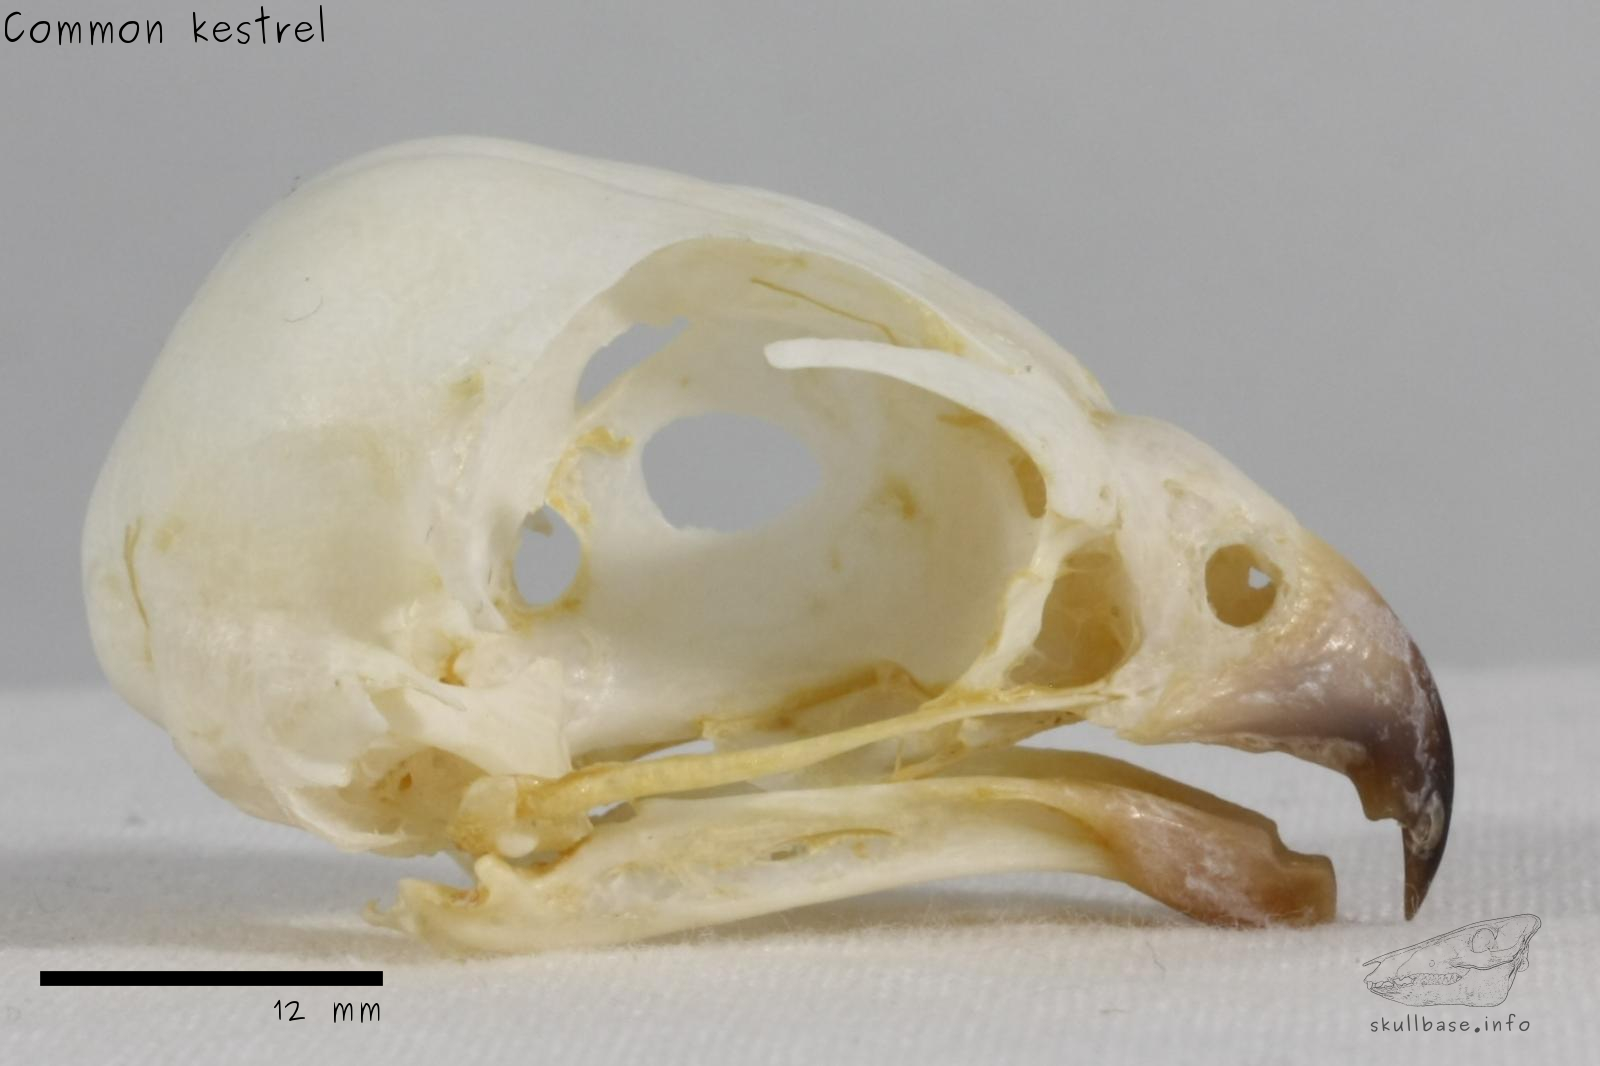 Common kestrel (Falco tinnunculus) skull lateral view